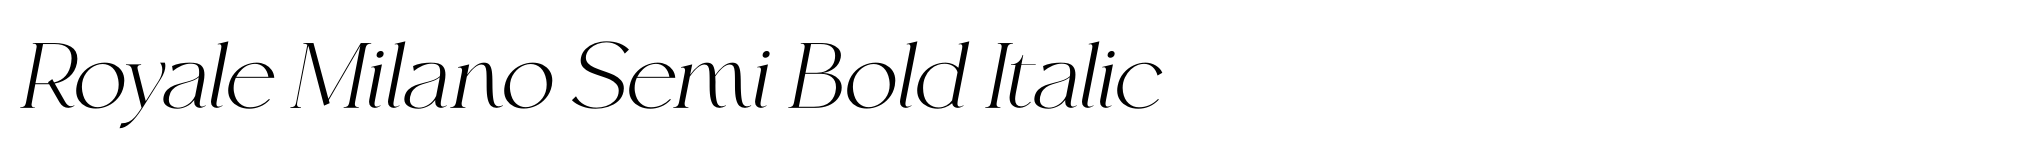 Royale Milano Semi Bold Italic image